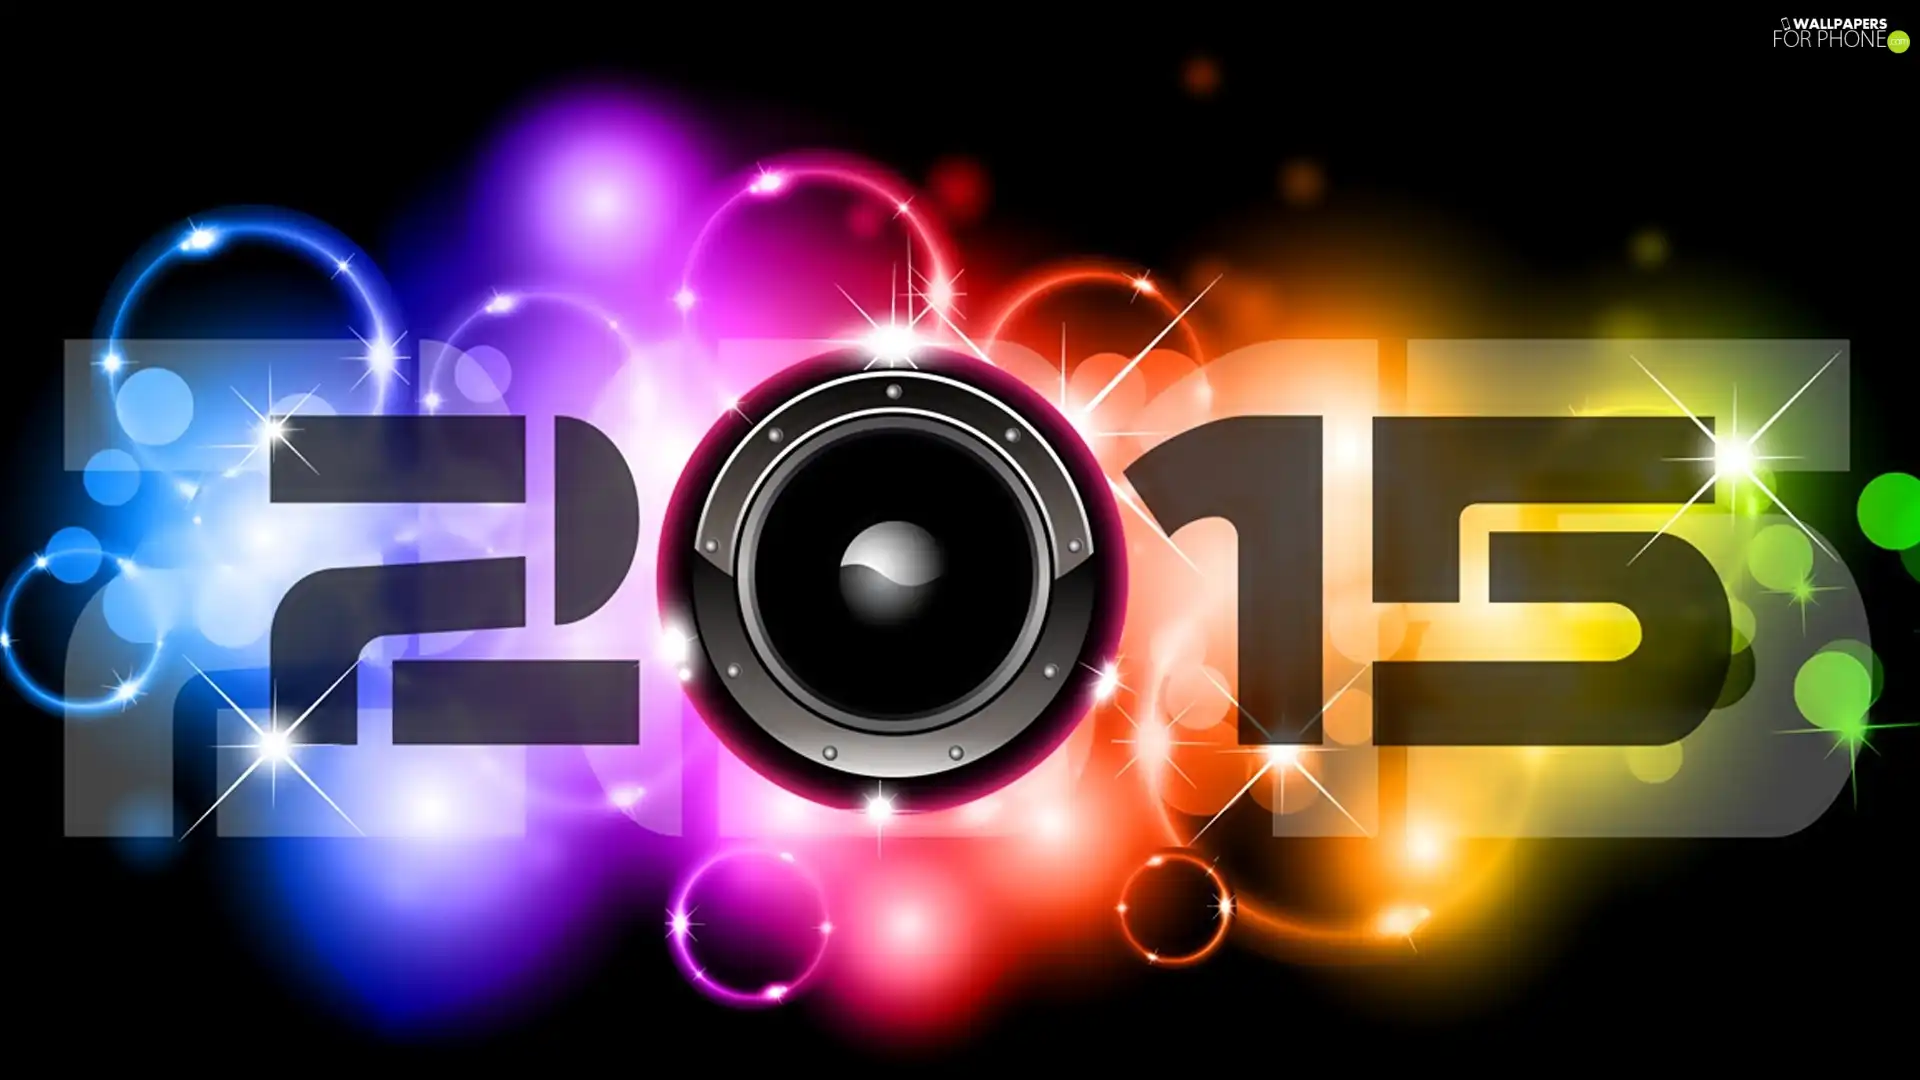 2015, New Year